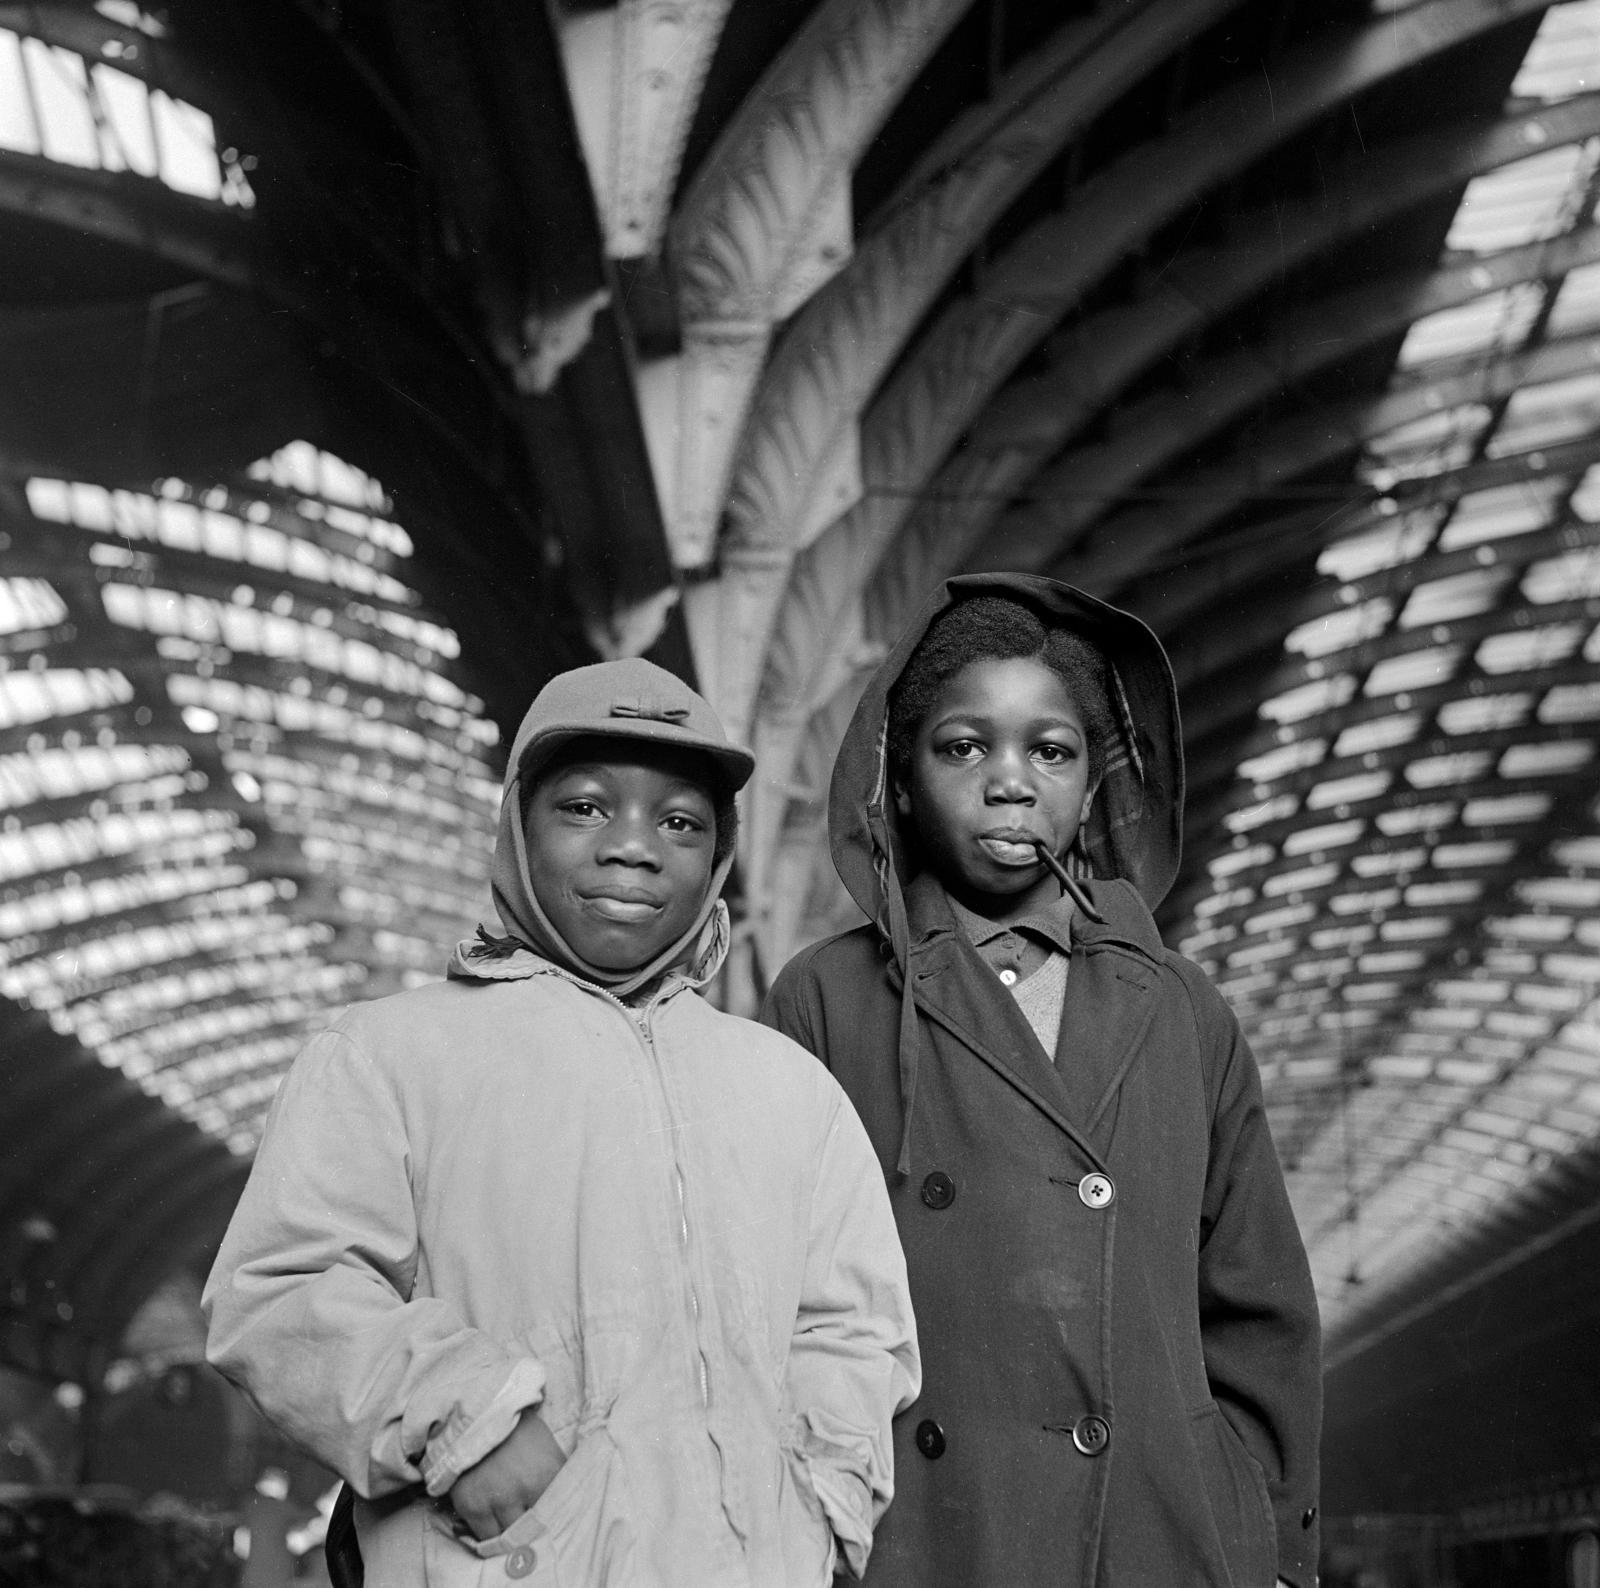 Two boys at Paddington Station. Black and white photo taken in 1960s.